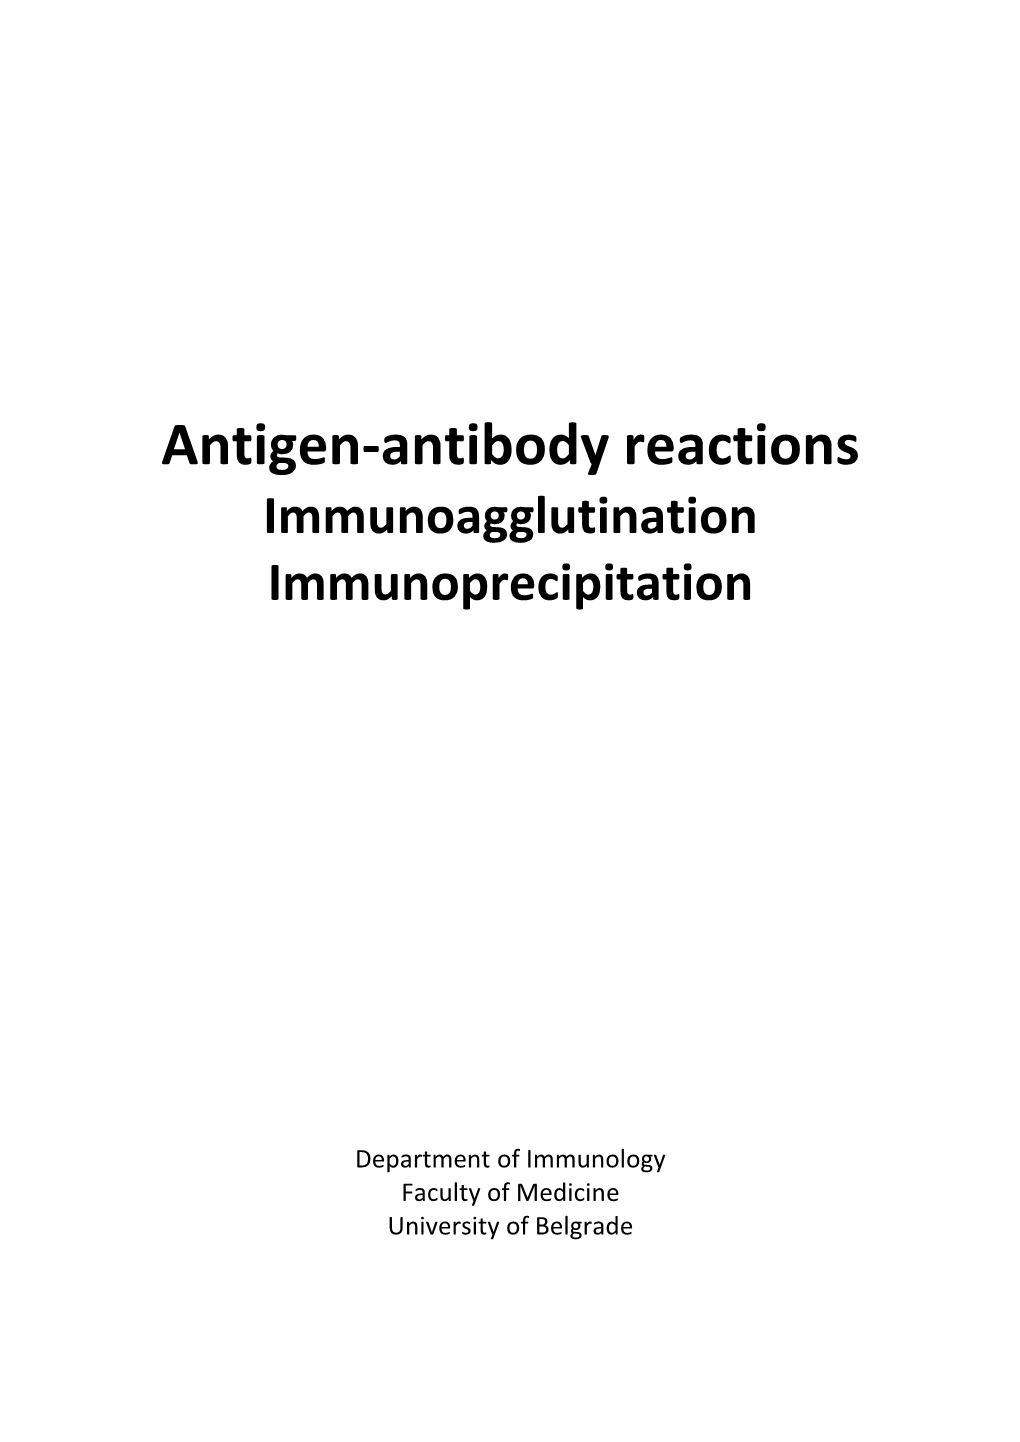 Antigen – Antibody Reactions